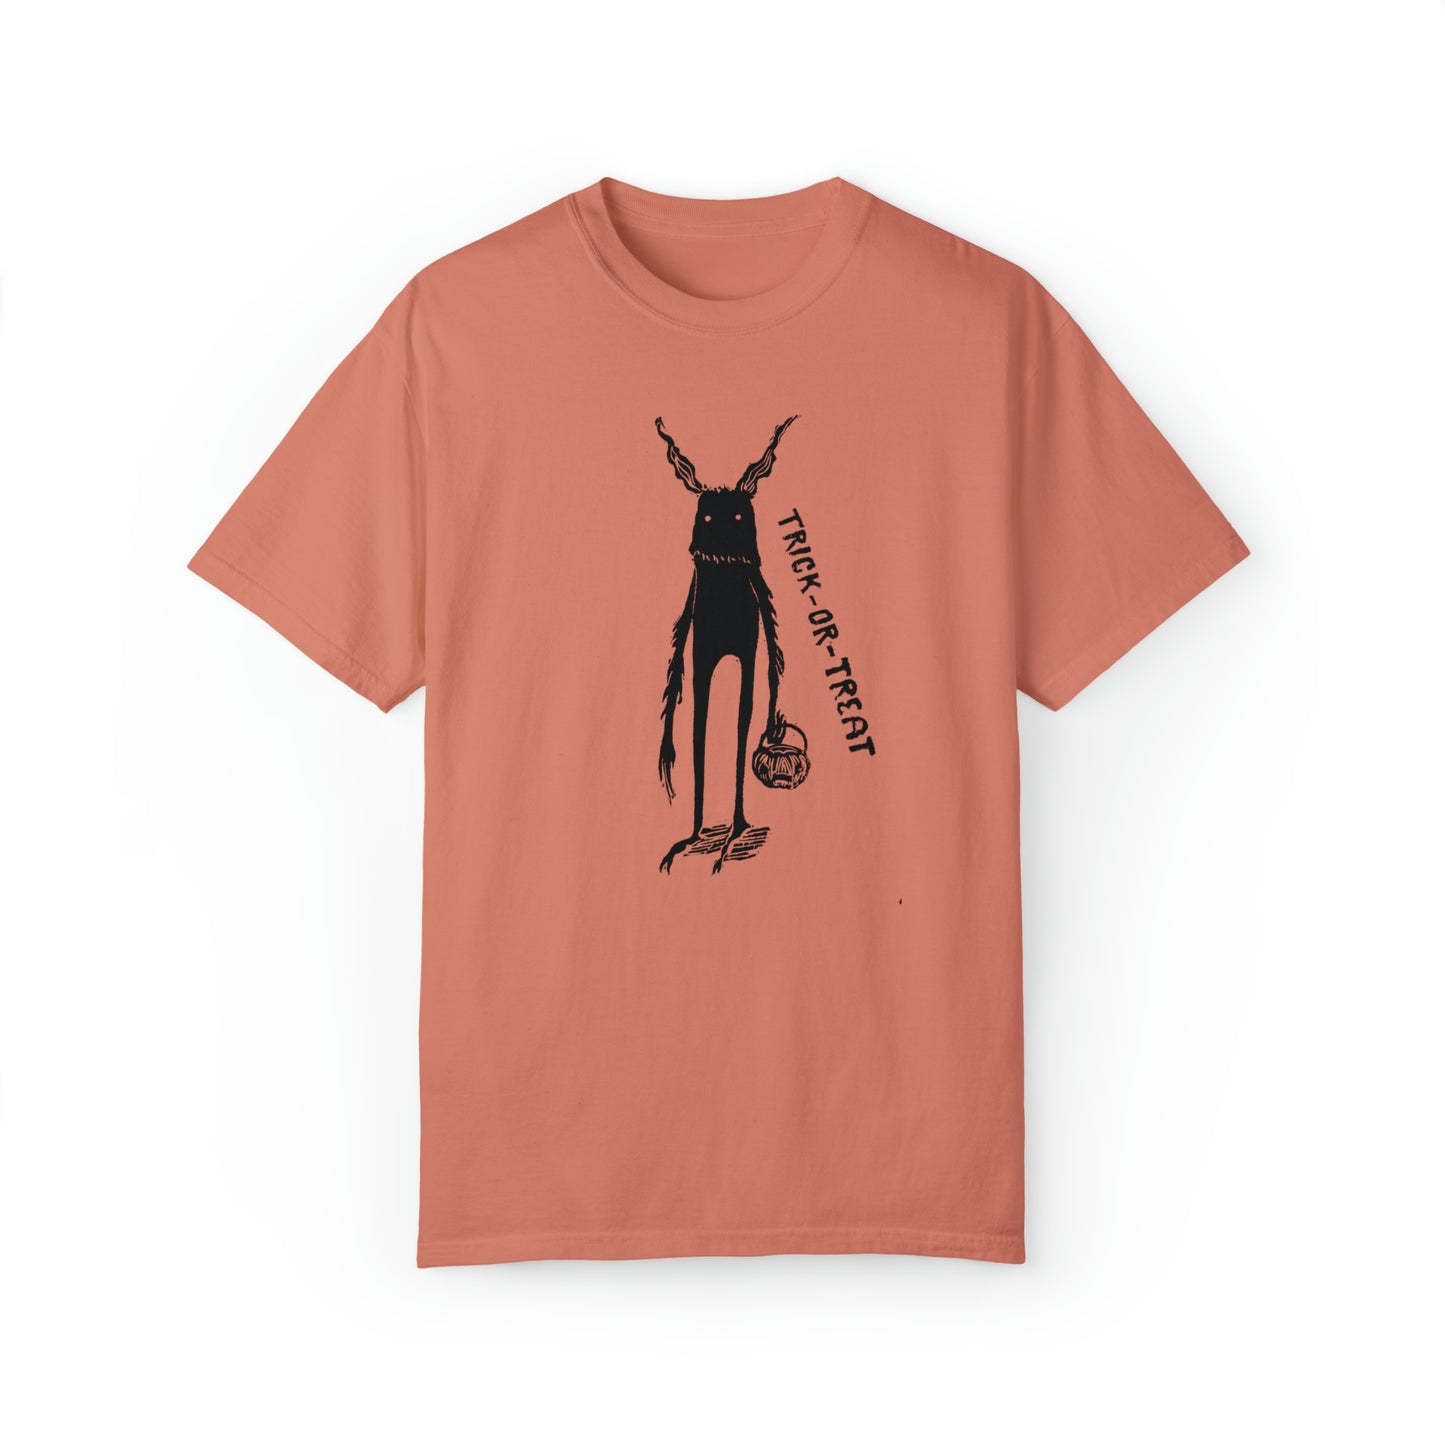 Creepy Monster Halloween T-Shirt - Comfort Colors Spooky Season T-shirt for Goblincore Aesthetic